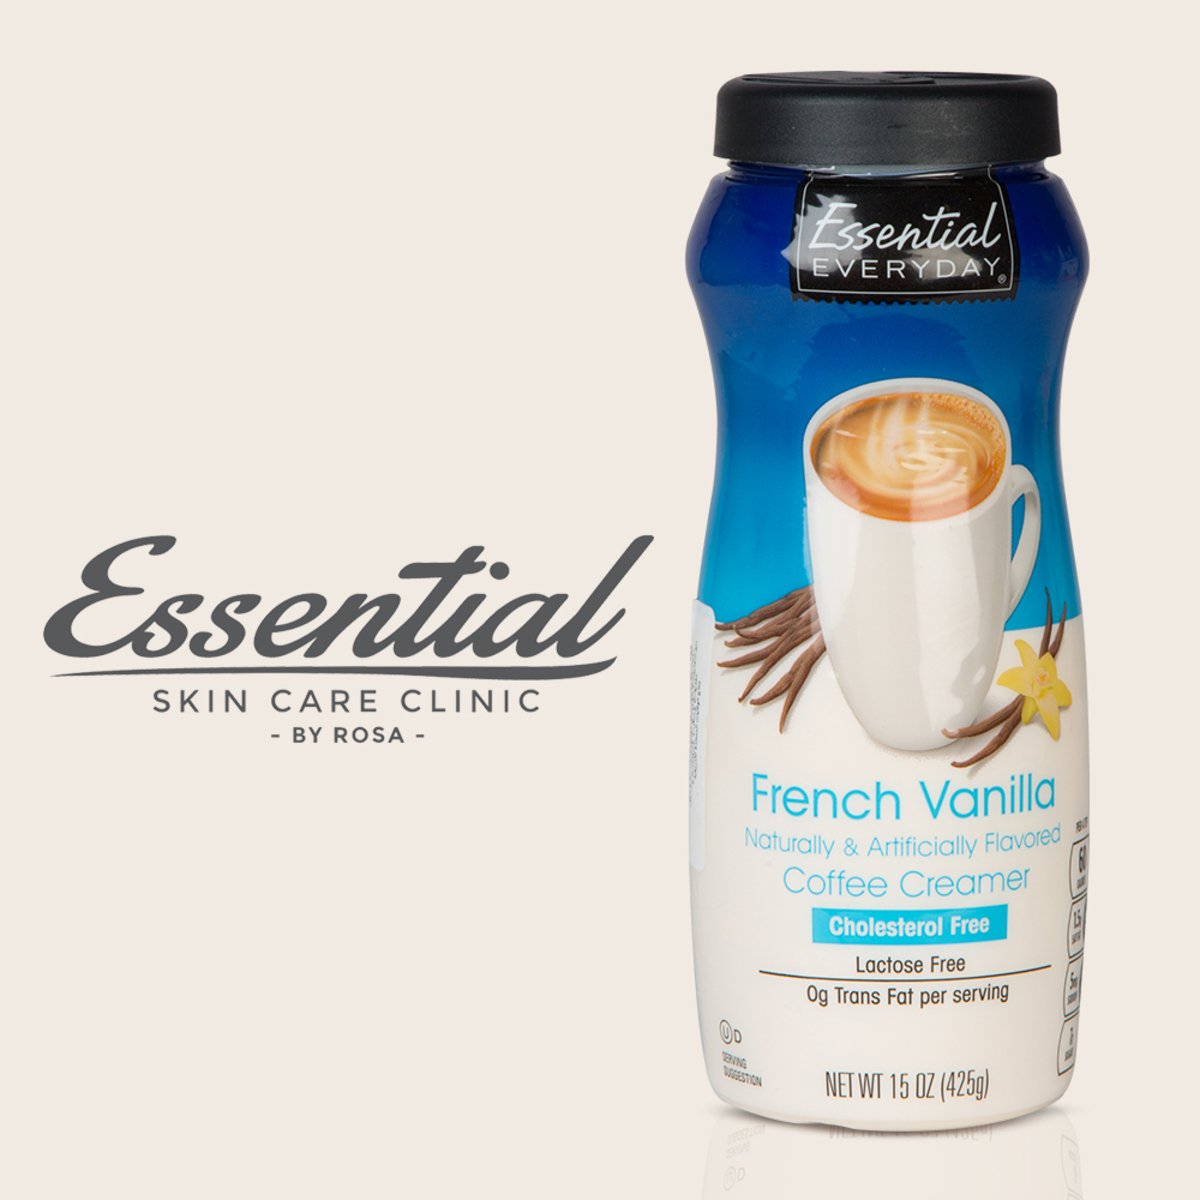 Essential Everyday Coffee Creamer French Vanilla 425 g